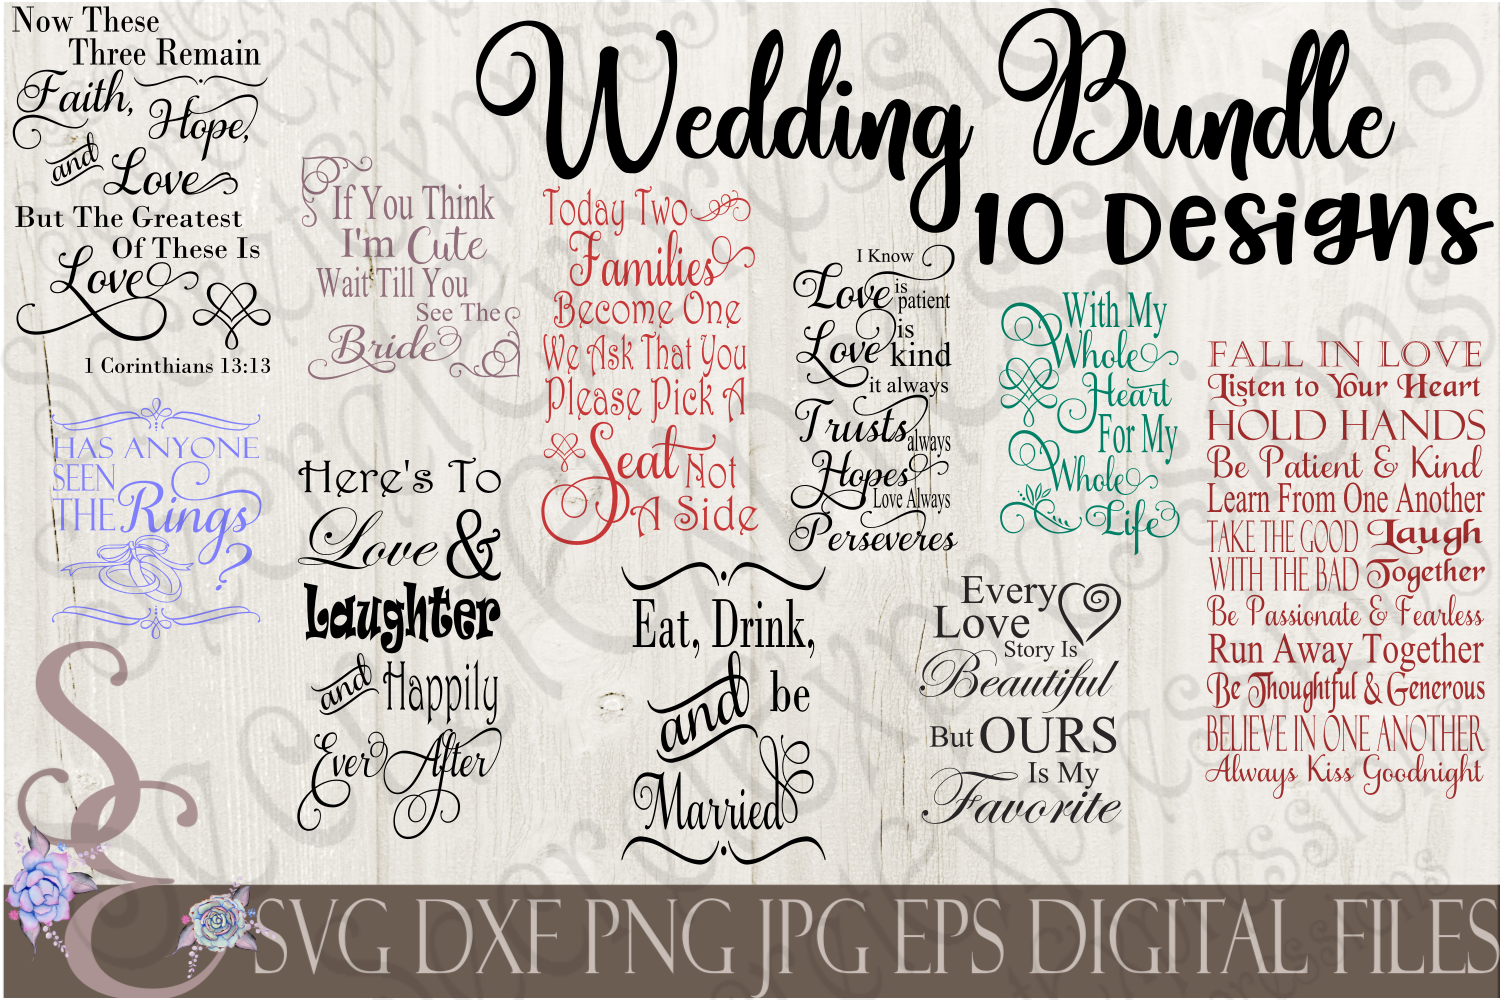 Wedding SVG Bundle 10 Designs